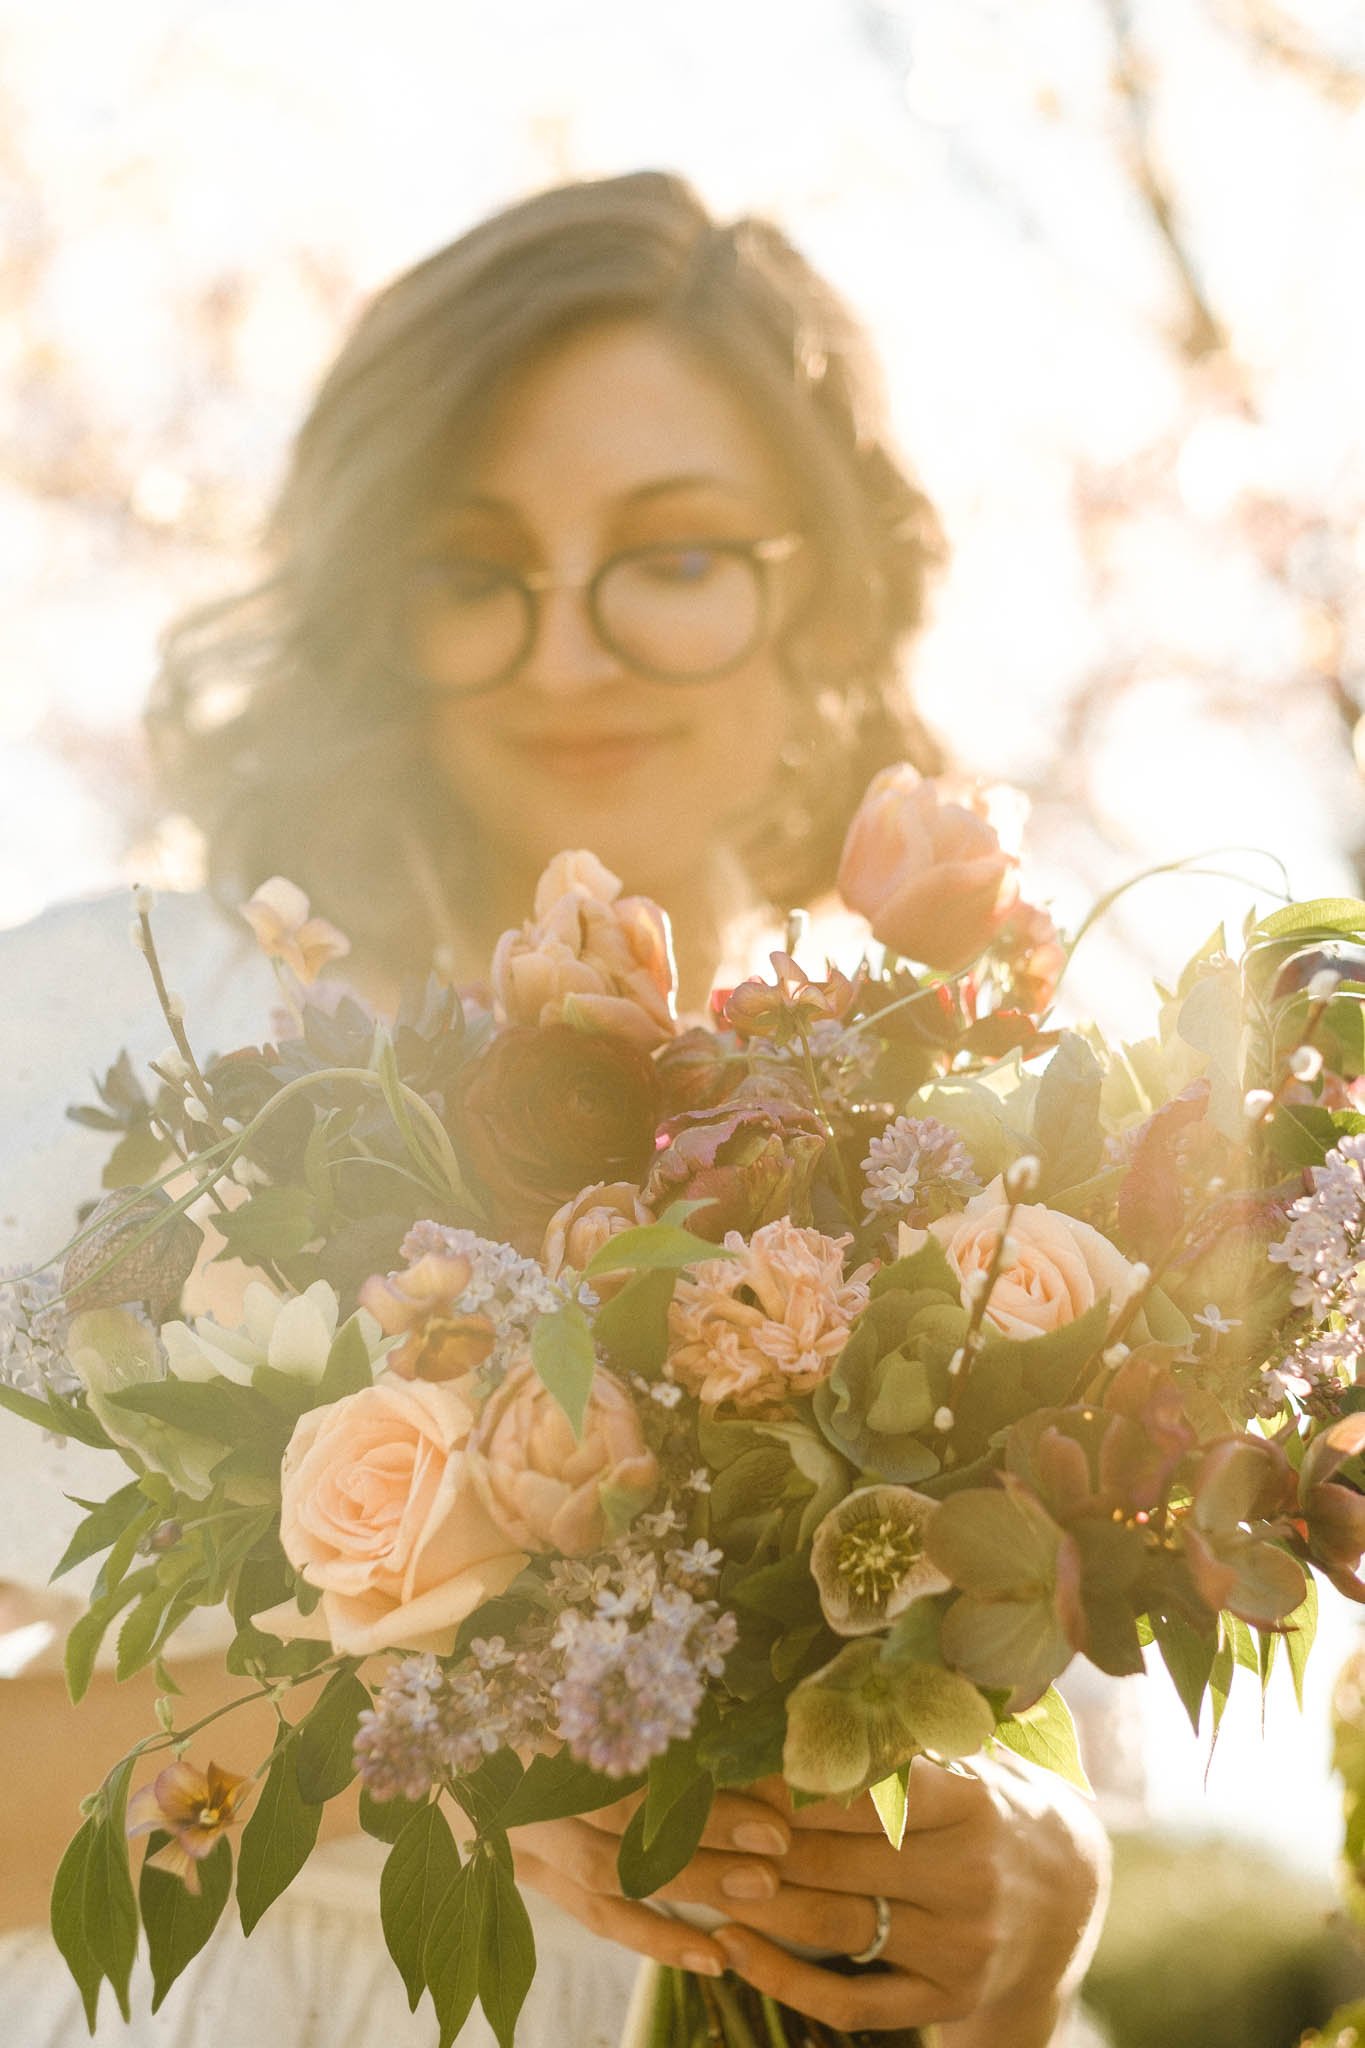  pittsburgh brand photographers - floral designer session 